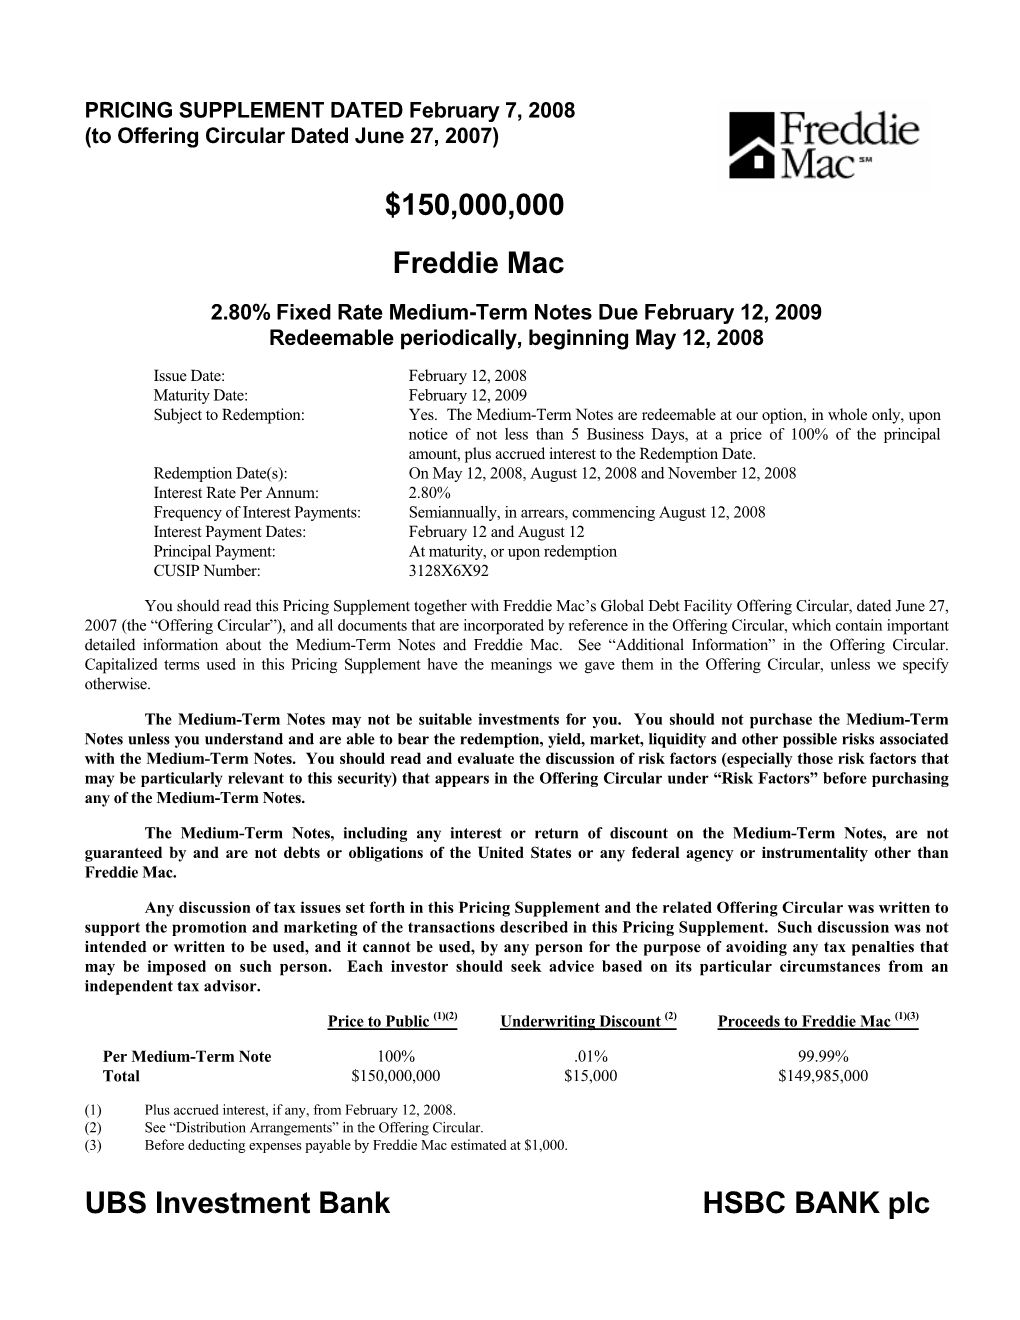 $150,000,000 Freddie Mac UBS Investment Bank HSBC BANK